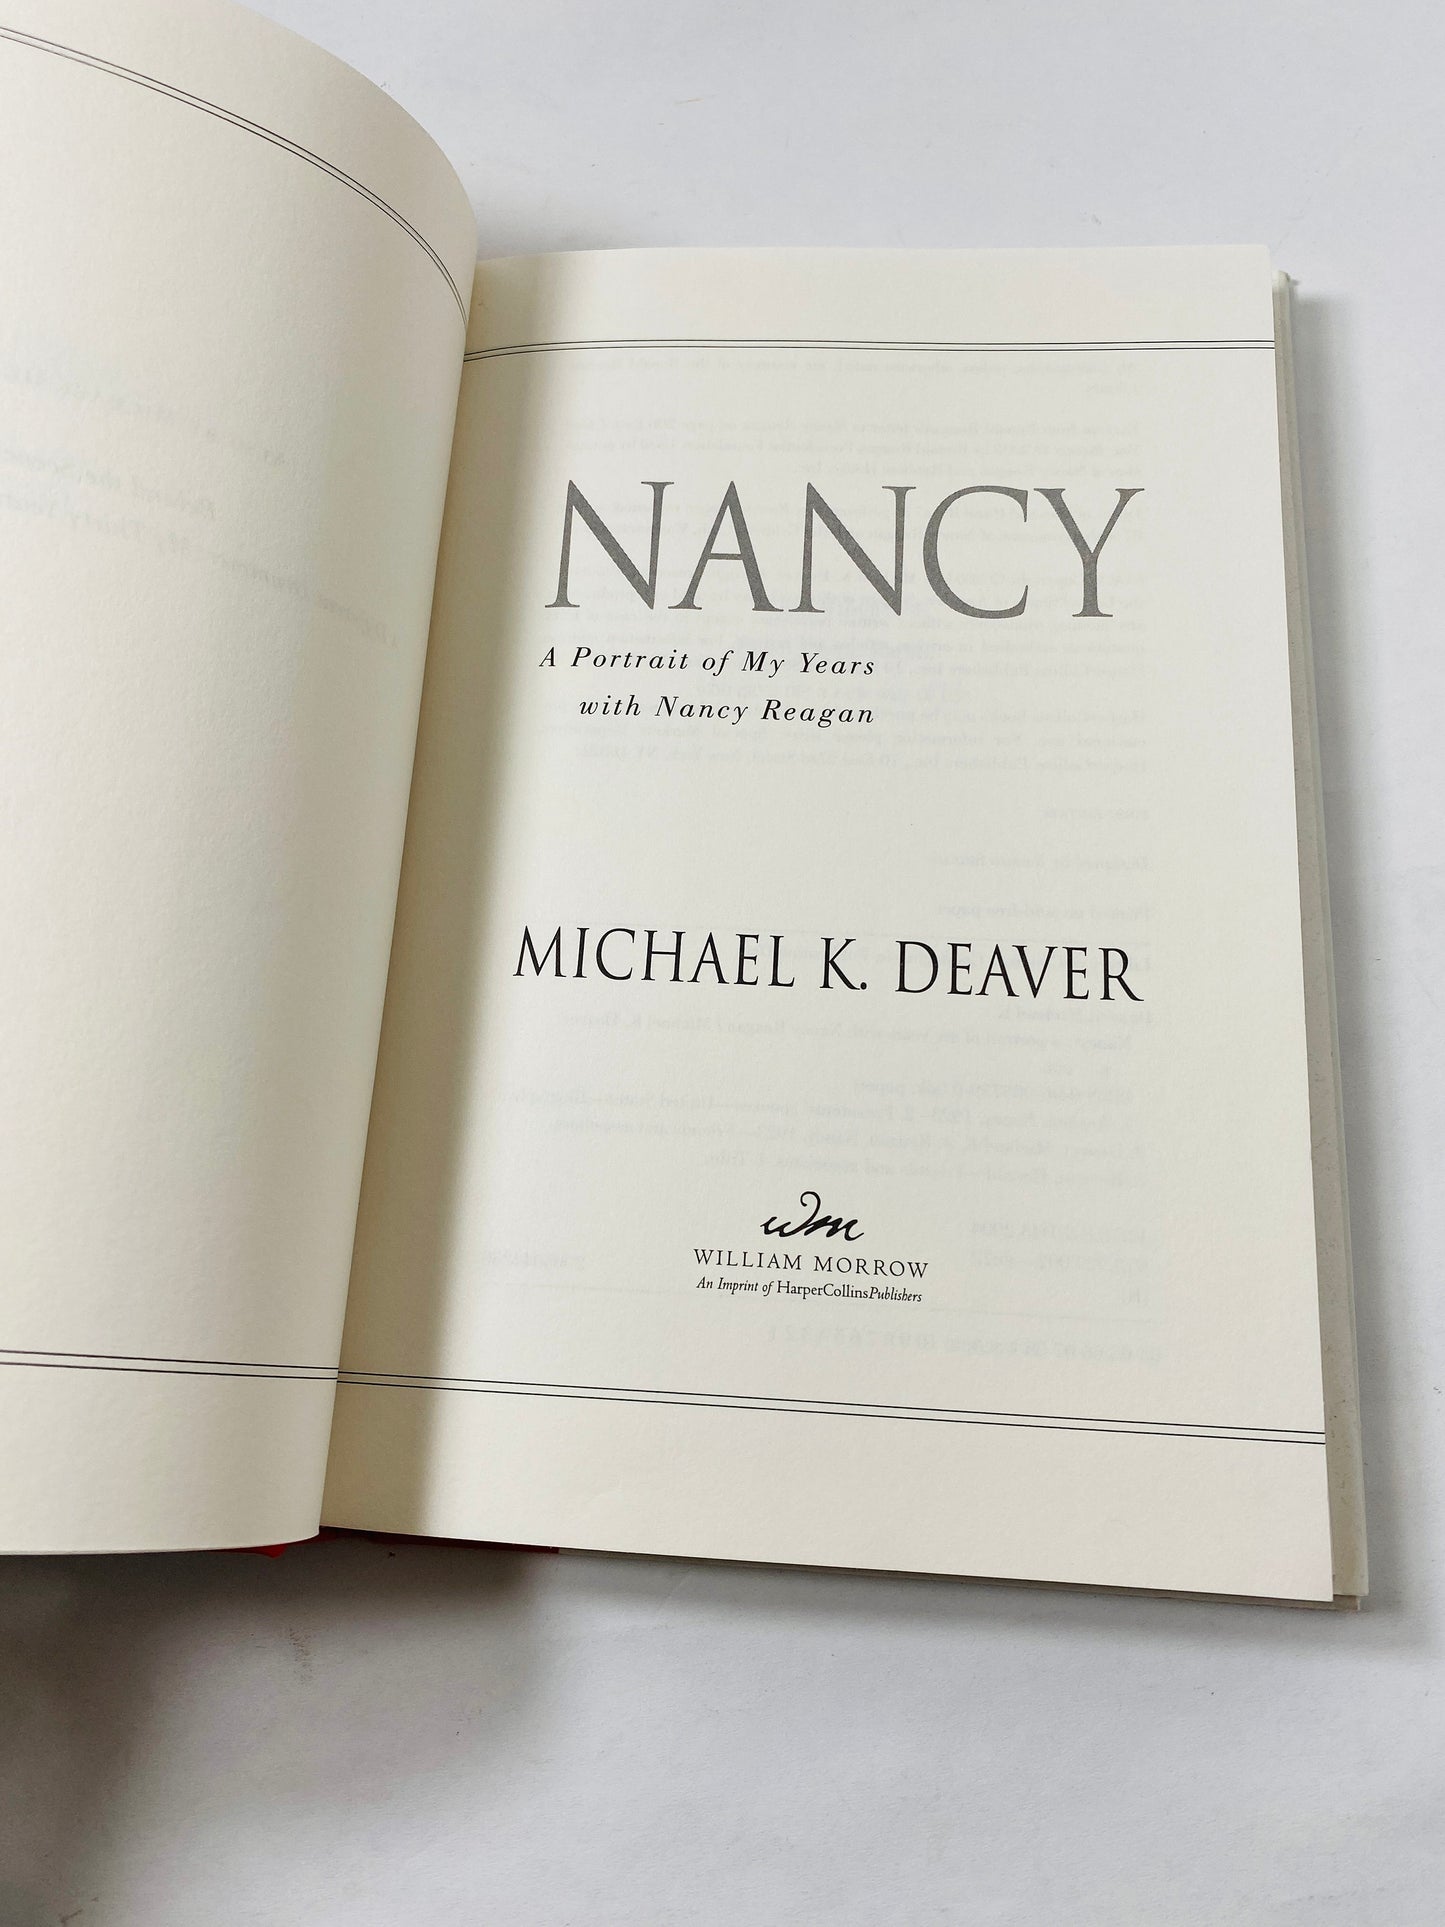 Nancy Regan Biography First Edition vintage book circa 2004 by Michael Deaver Book lover gift. White book decor. Republican